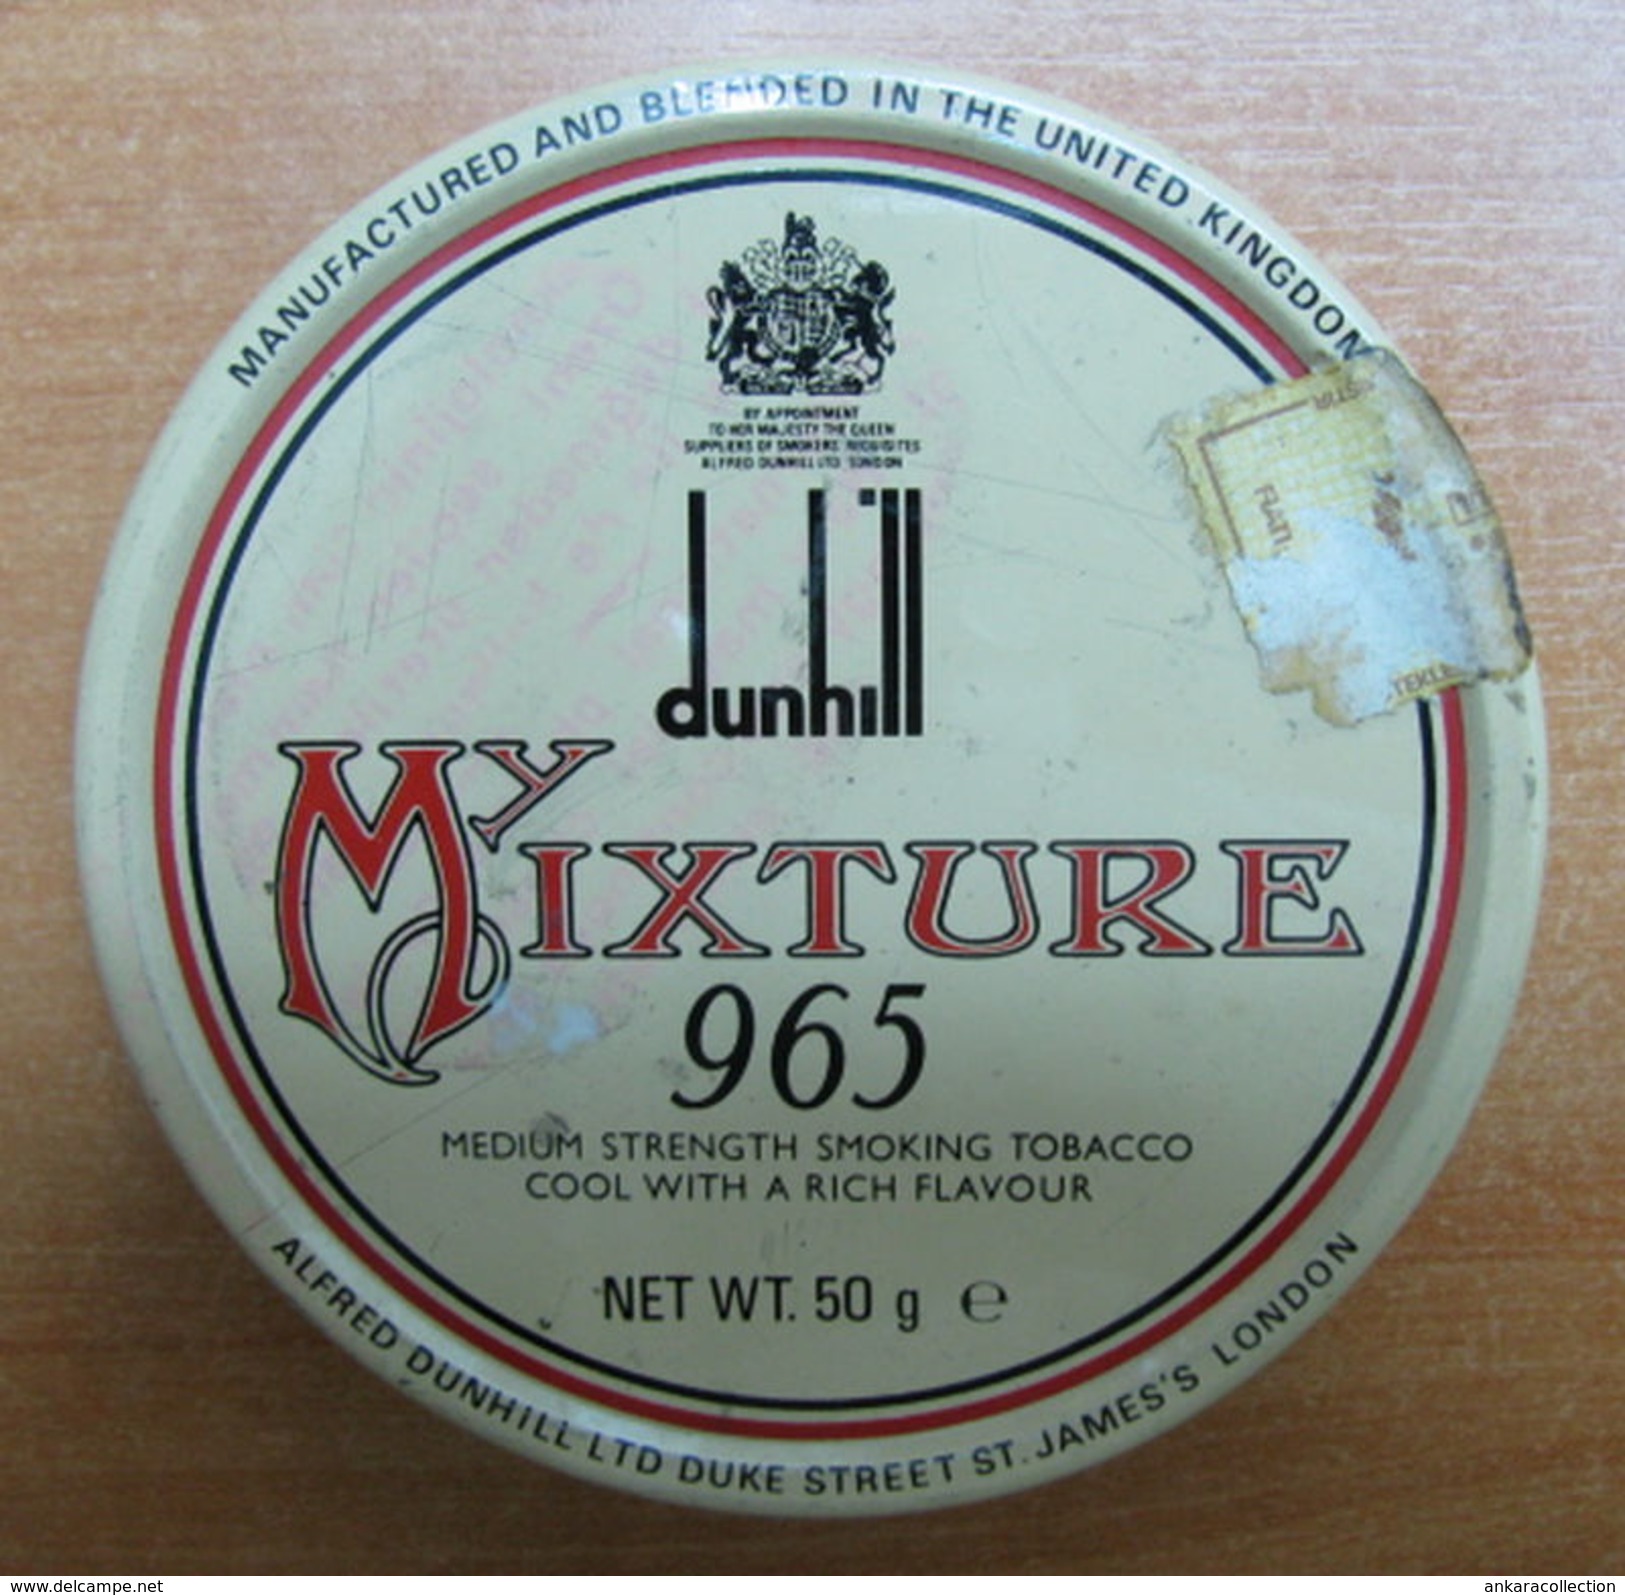 AC - DUNHILL MIXTURE 965 CIGARETE - TOBACCO EMPTY TIN BOX FINE CONDITION FOR COLLECTION - Boites à Tabac Vides